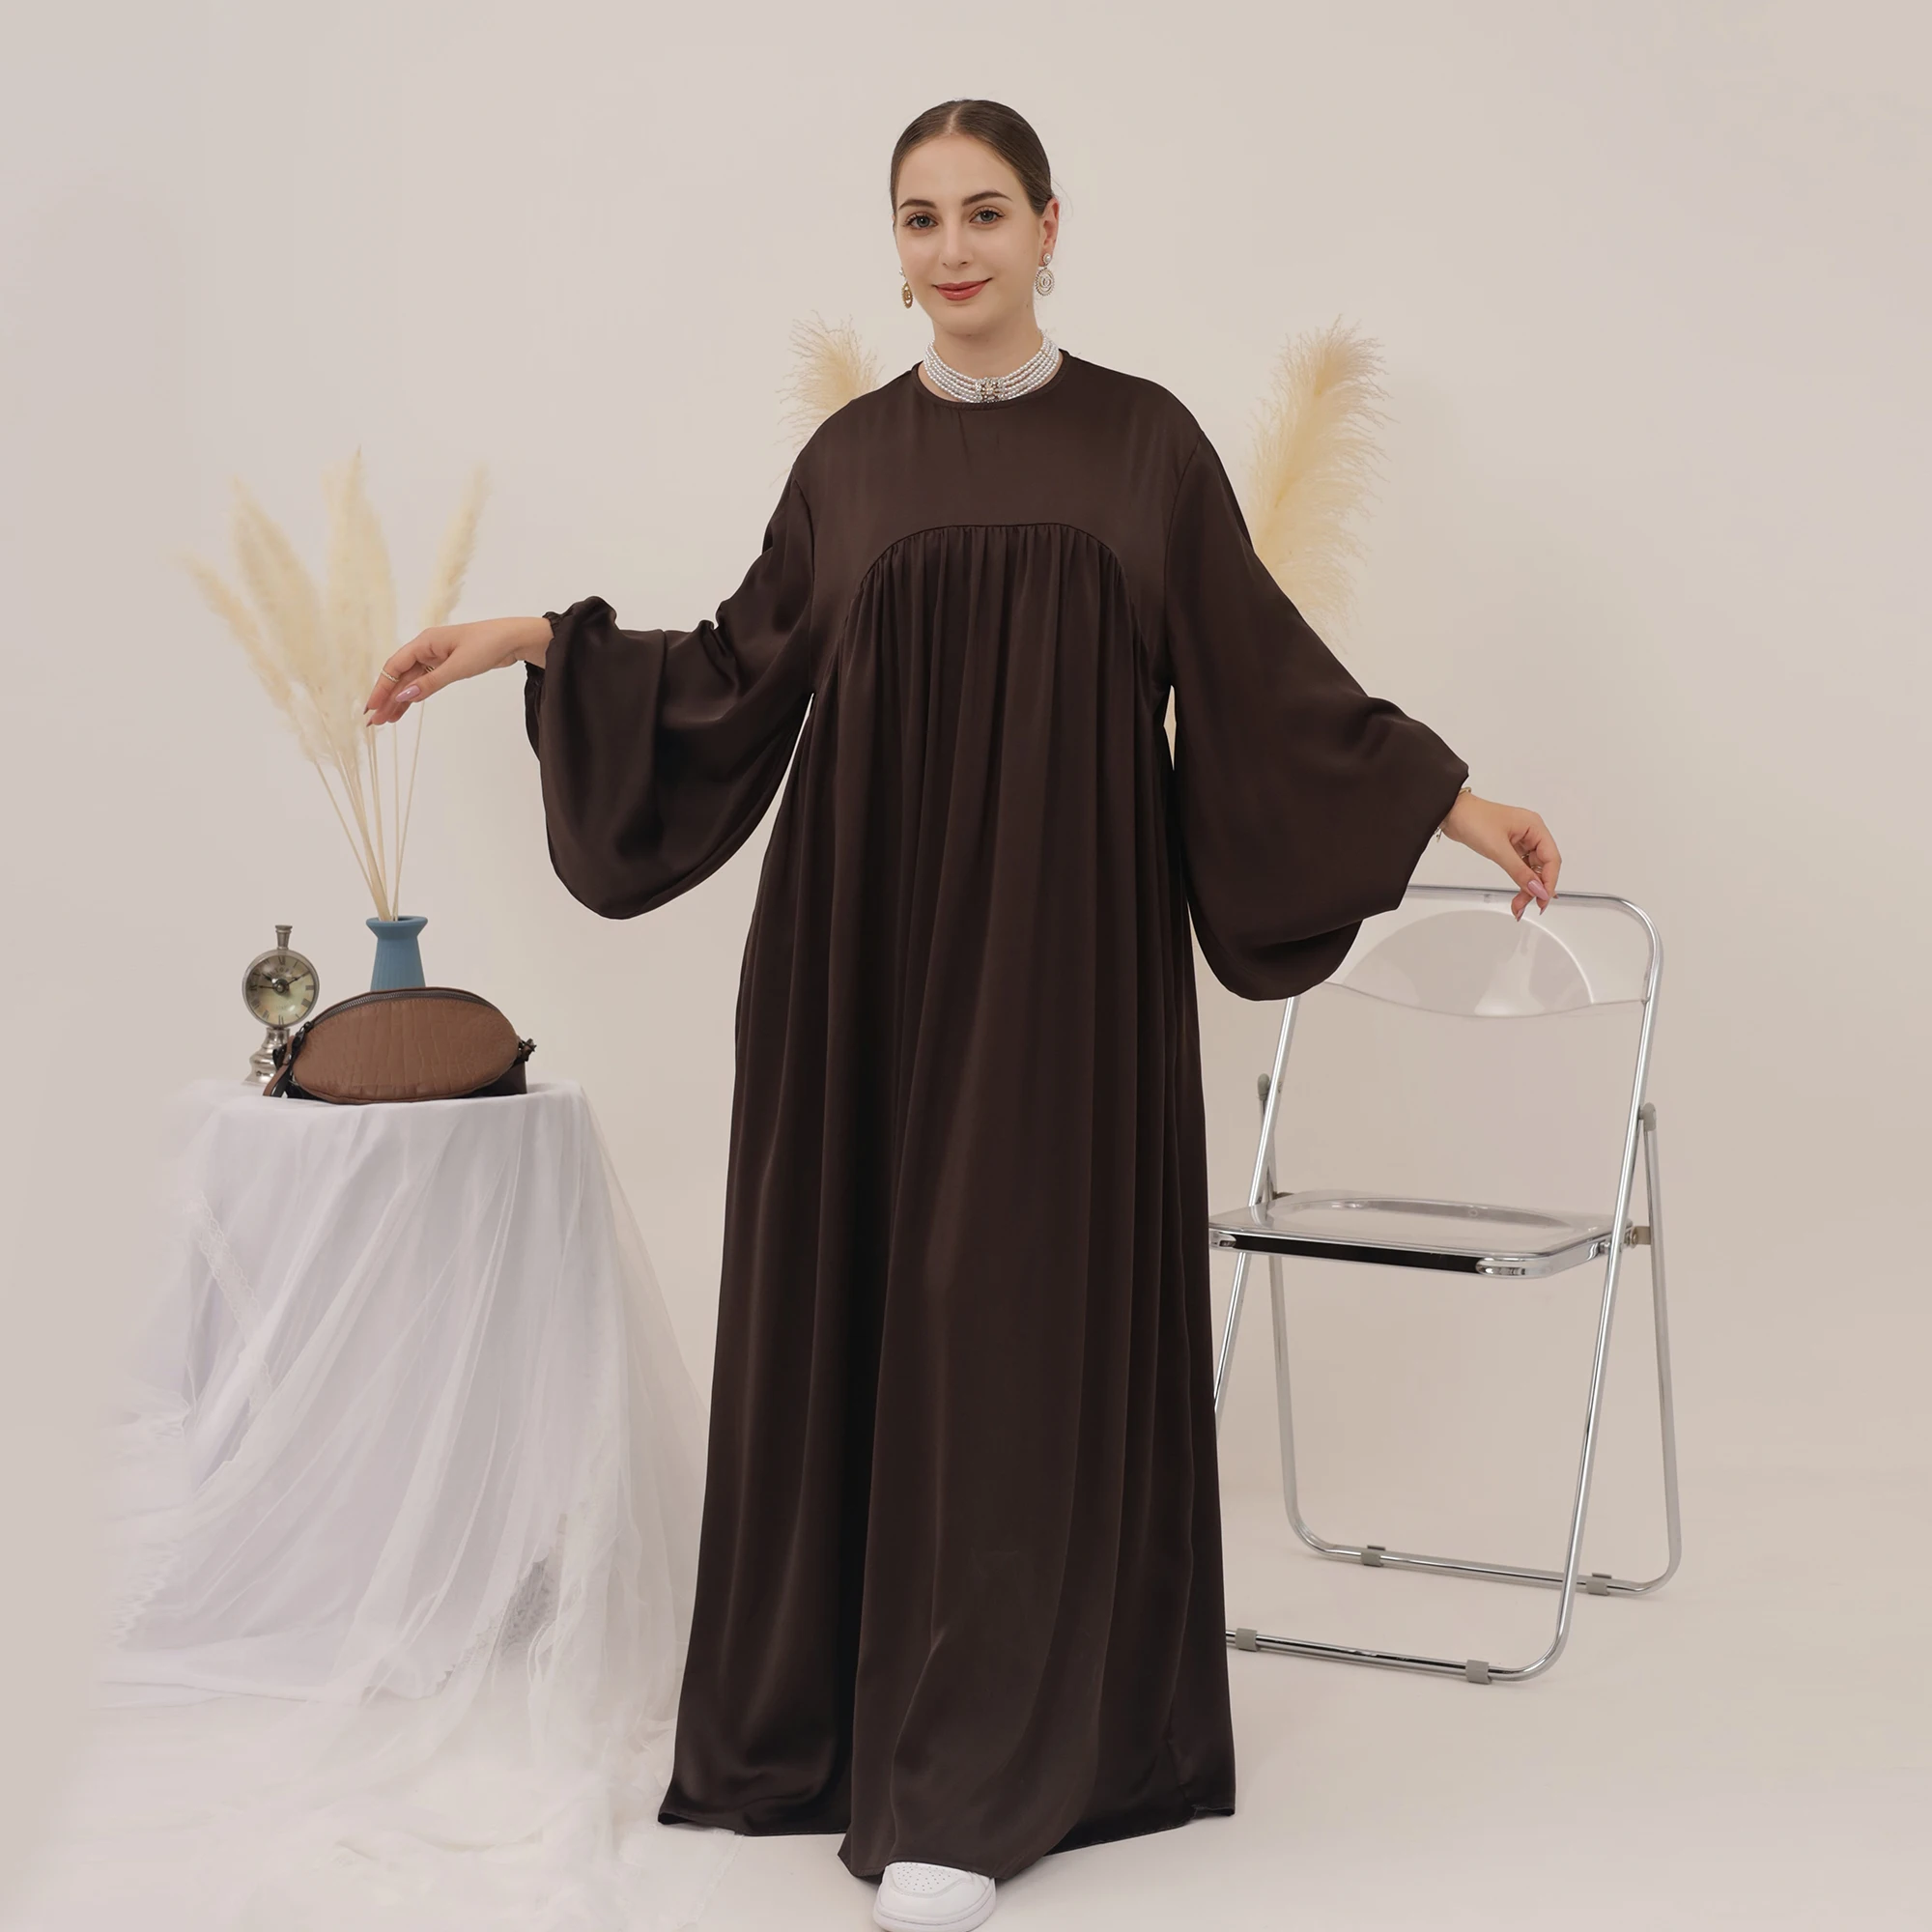 Shimmer Abaya Muslim Dress Loose Style Bishop Sleeves Islam Clothing Casual Women Dubai Hijabi Robe Ramadan